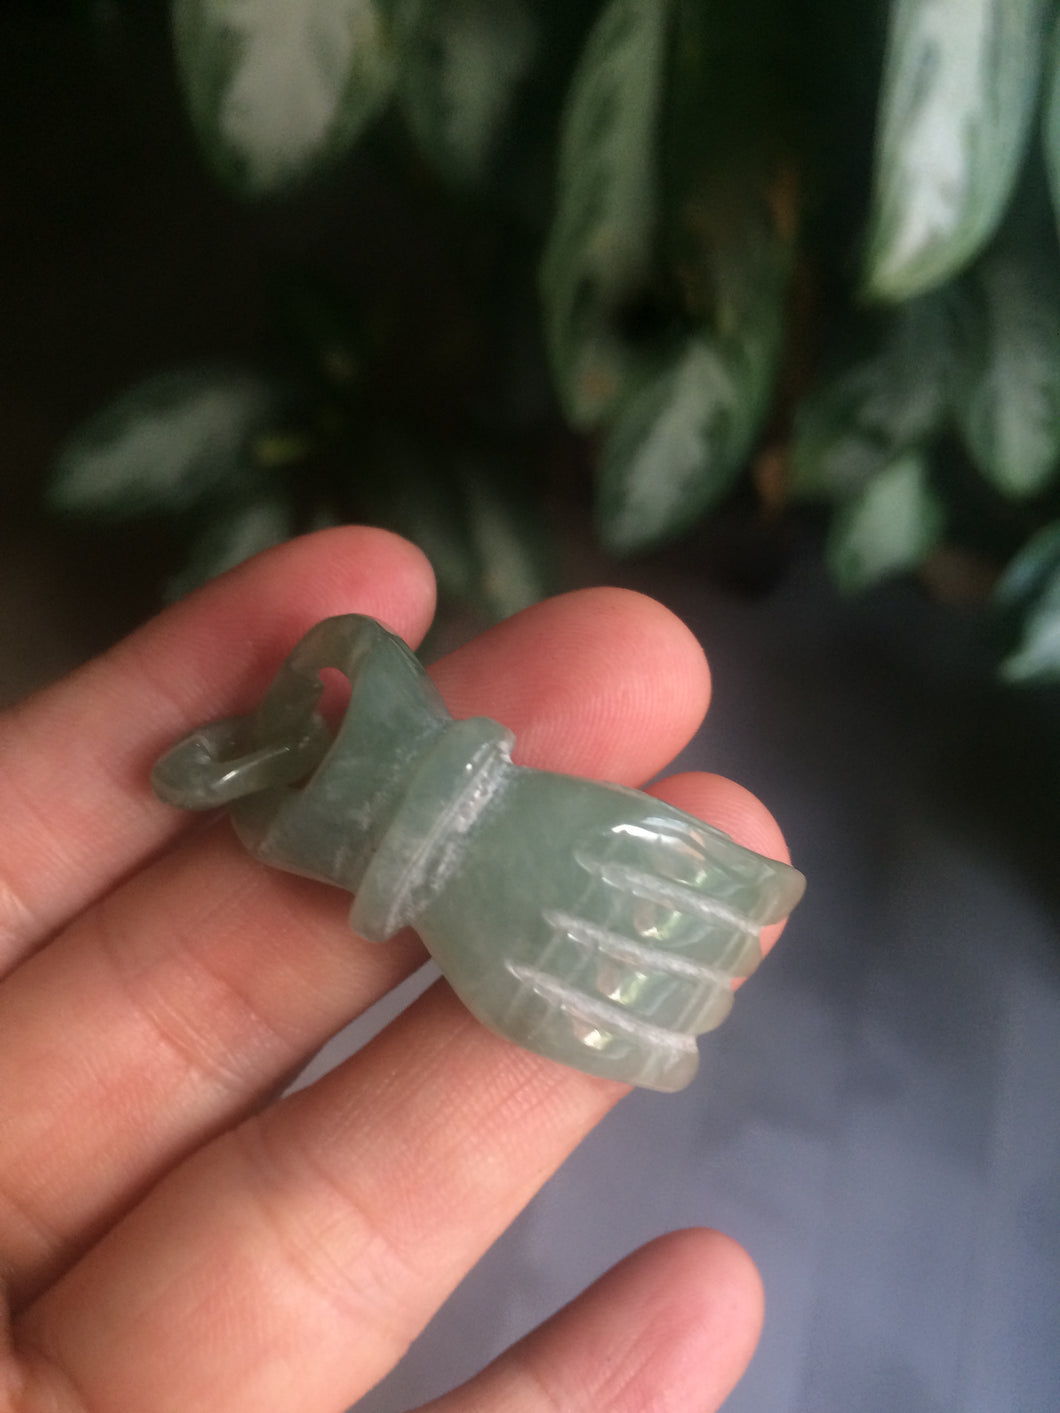 100% natural type A watery light green 3D jadeite jade hand pendant/hanger for Halloween QP-2 (Clearance item)